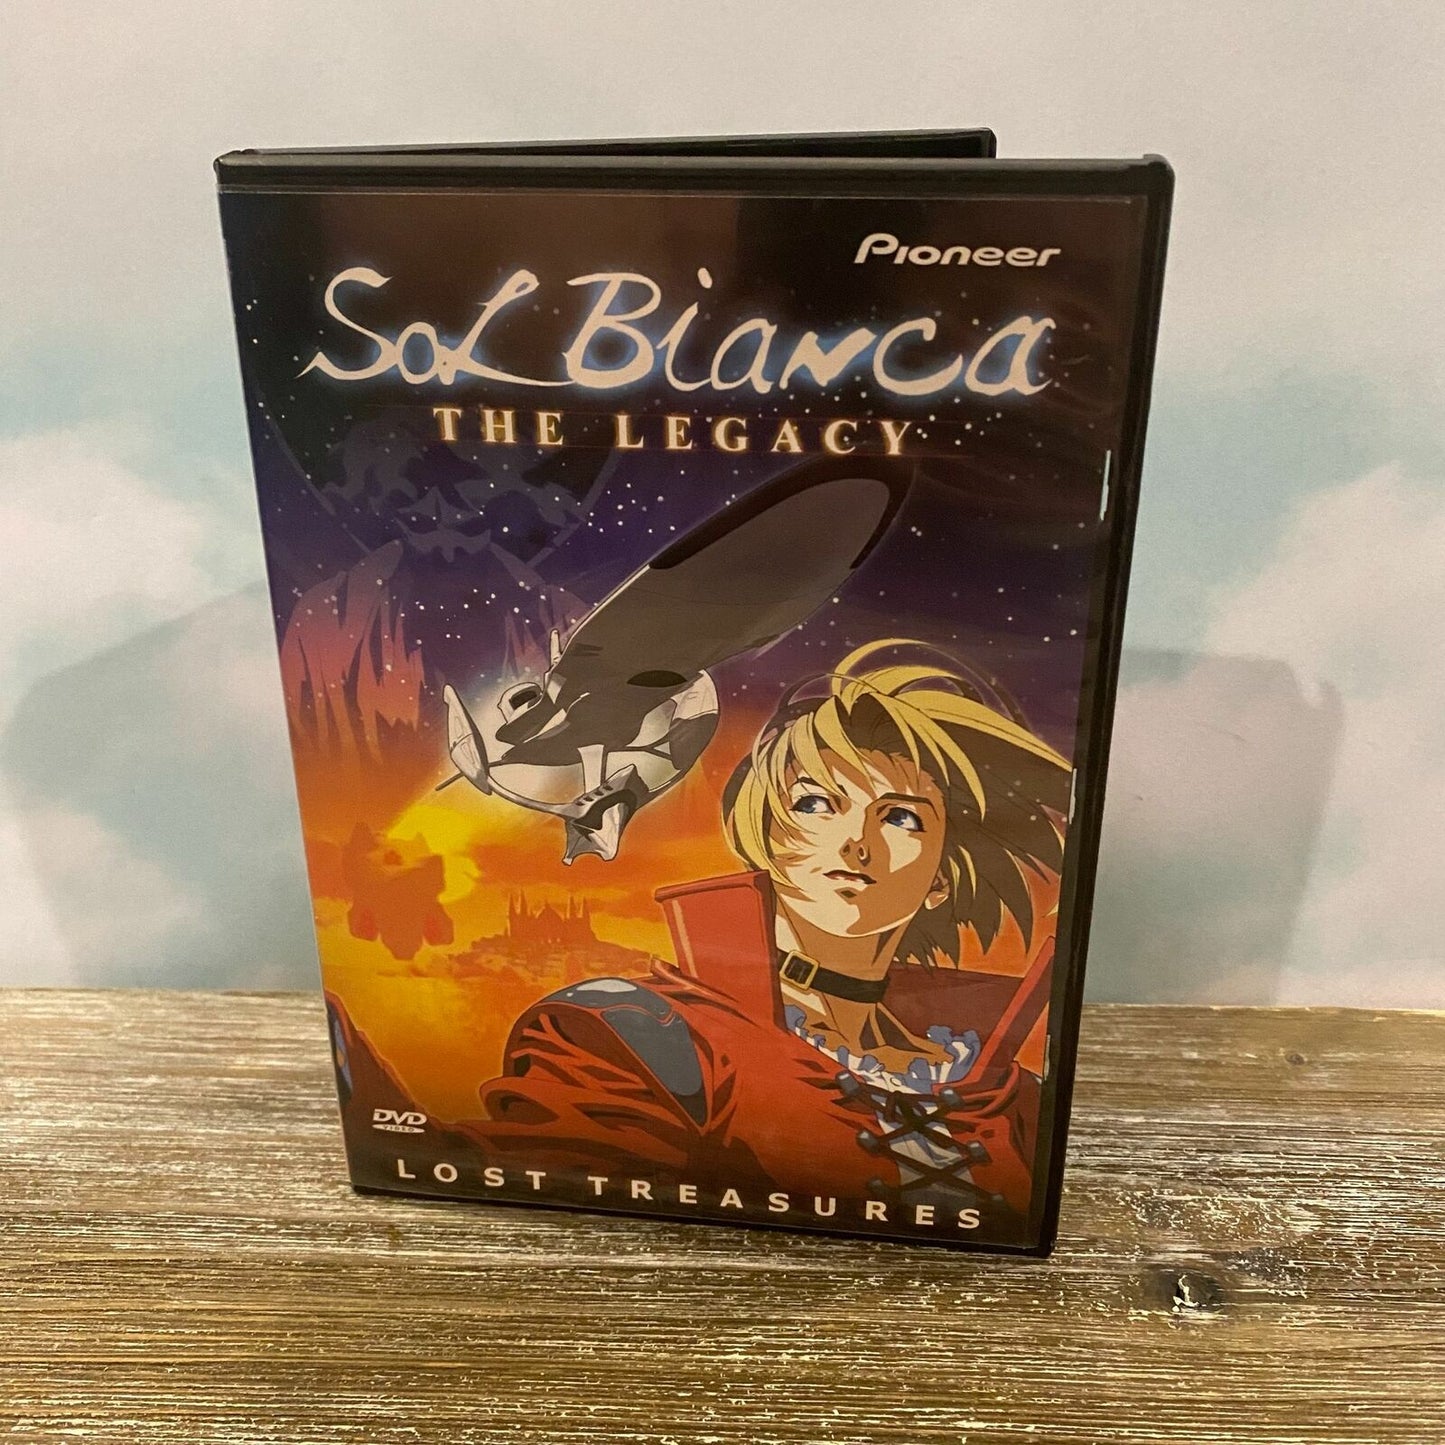 Sol Bianca The Legacy Lost Treasures Anime Video DVD By Pioneer 1999